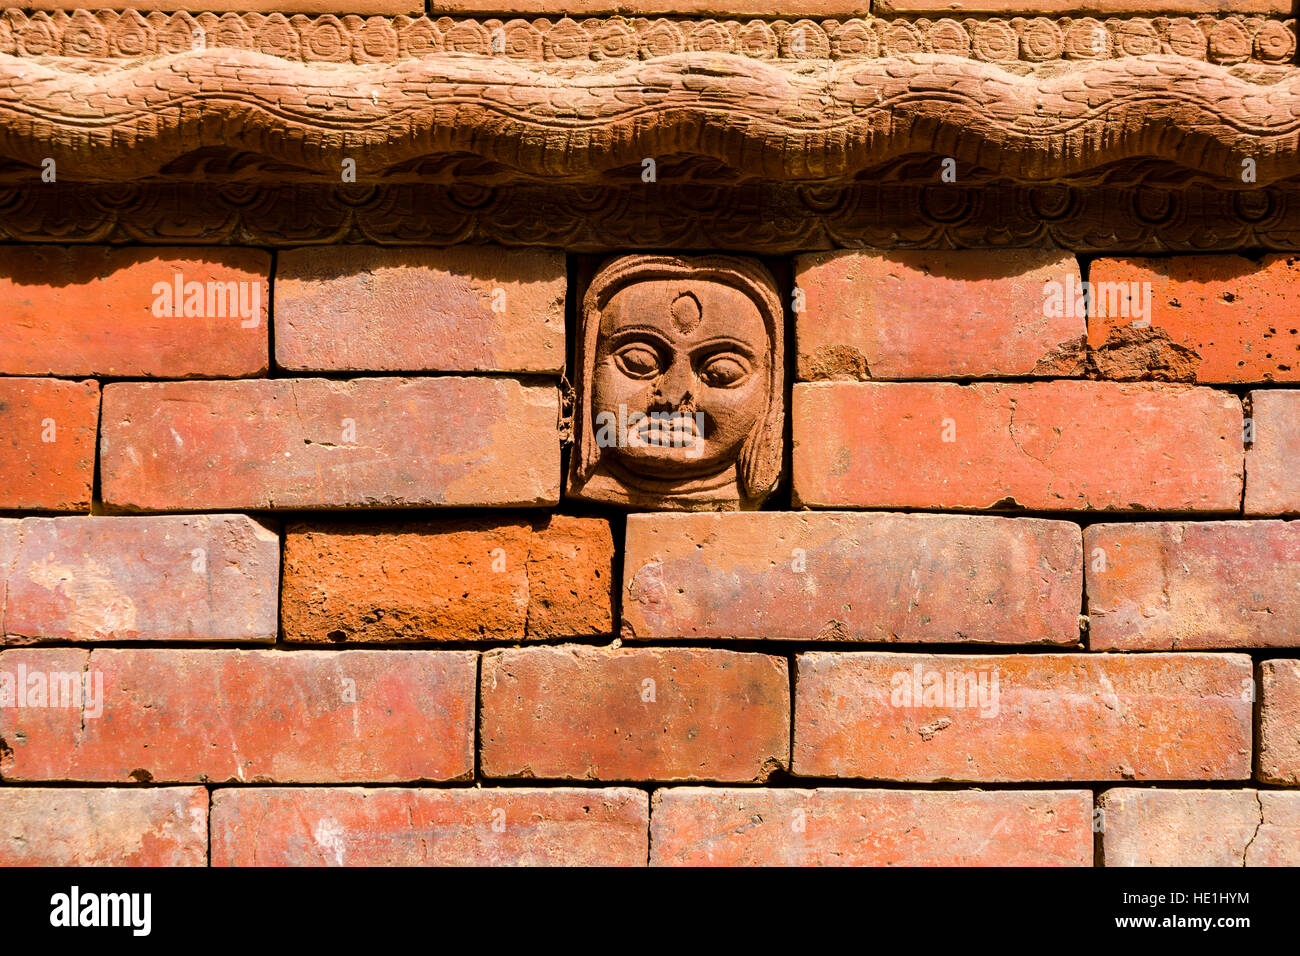 Artfully formed clay structures at the walls of the Hanuman Dhoka Palace Stock Photo